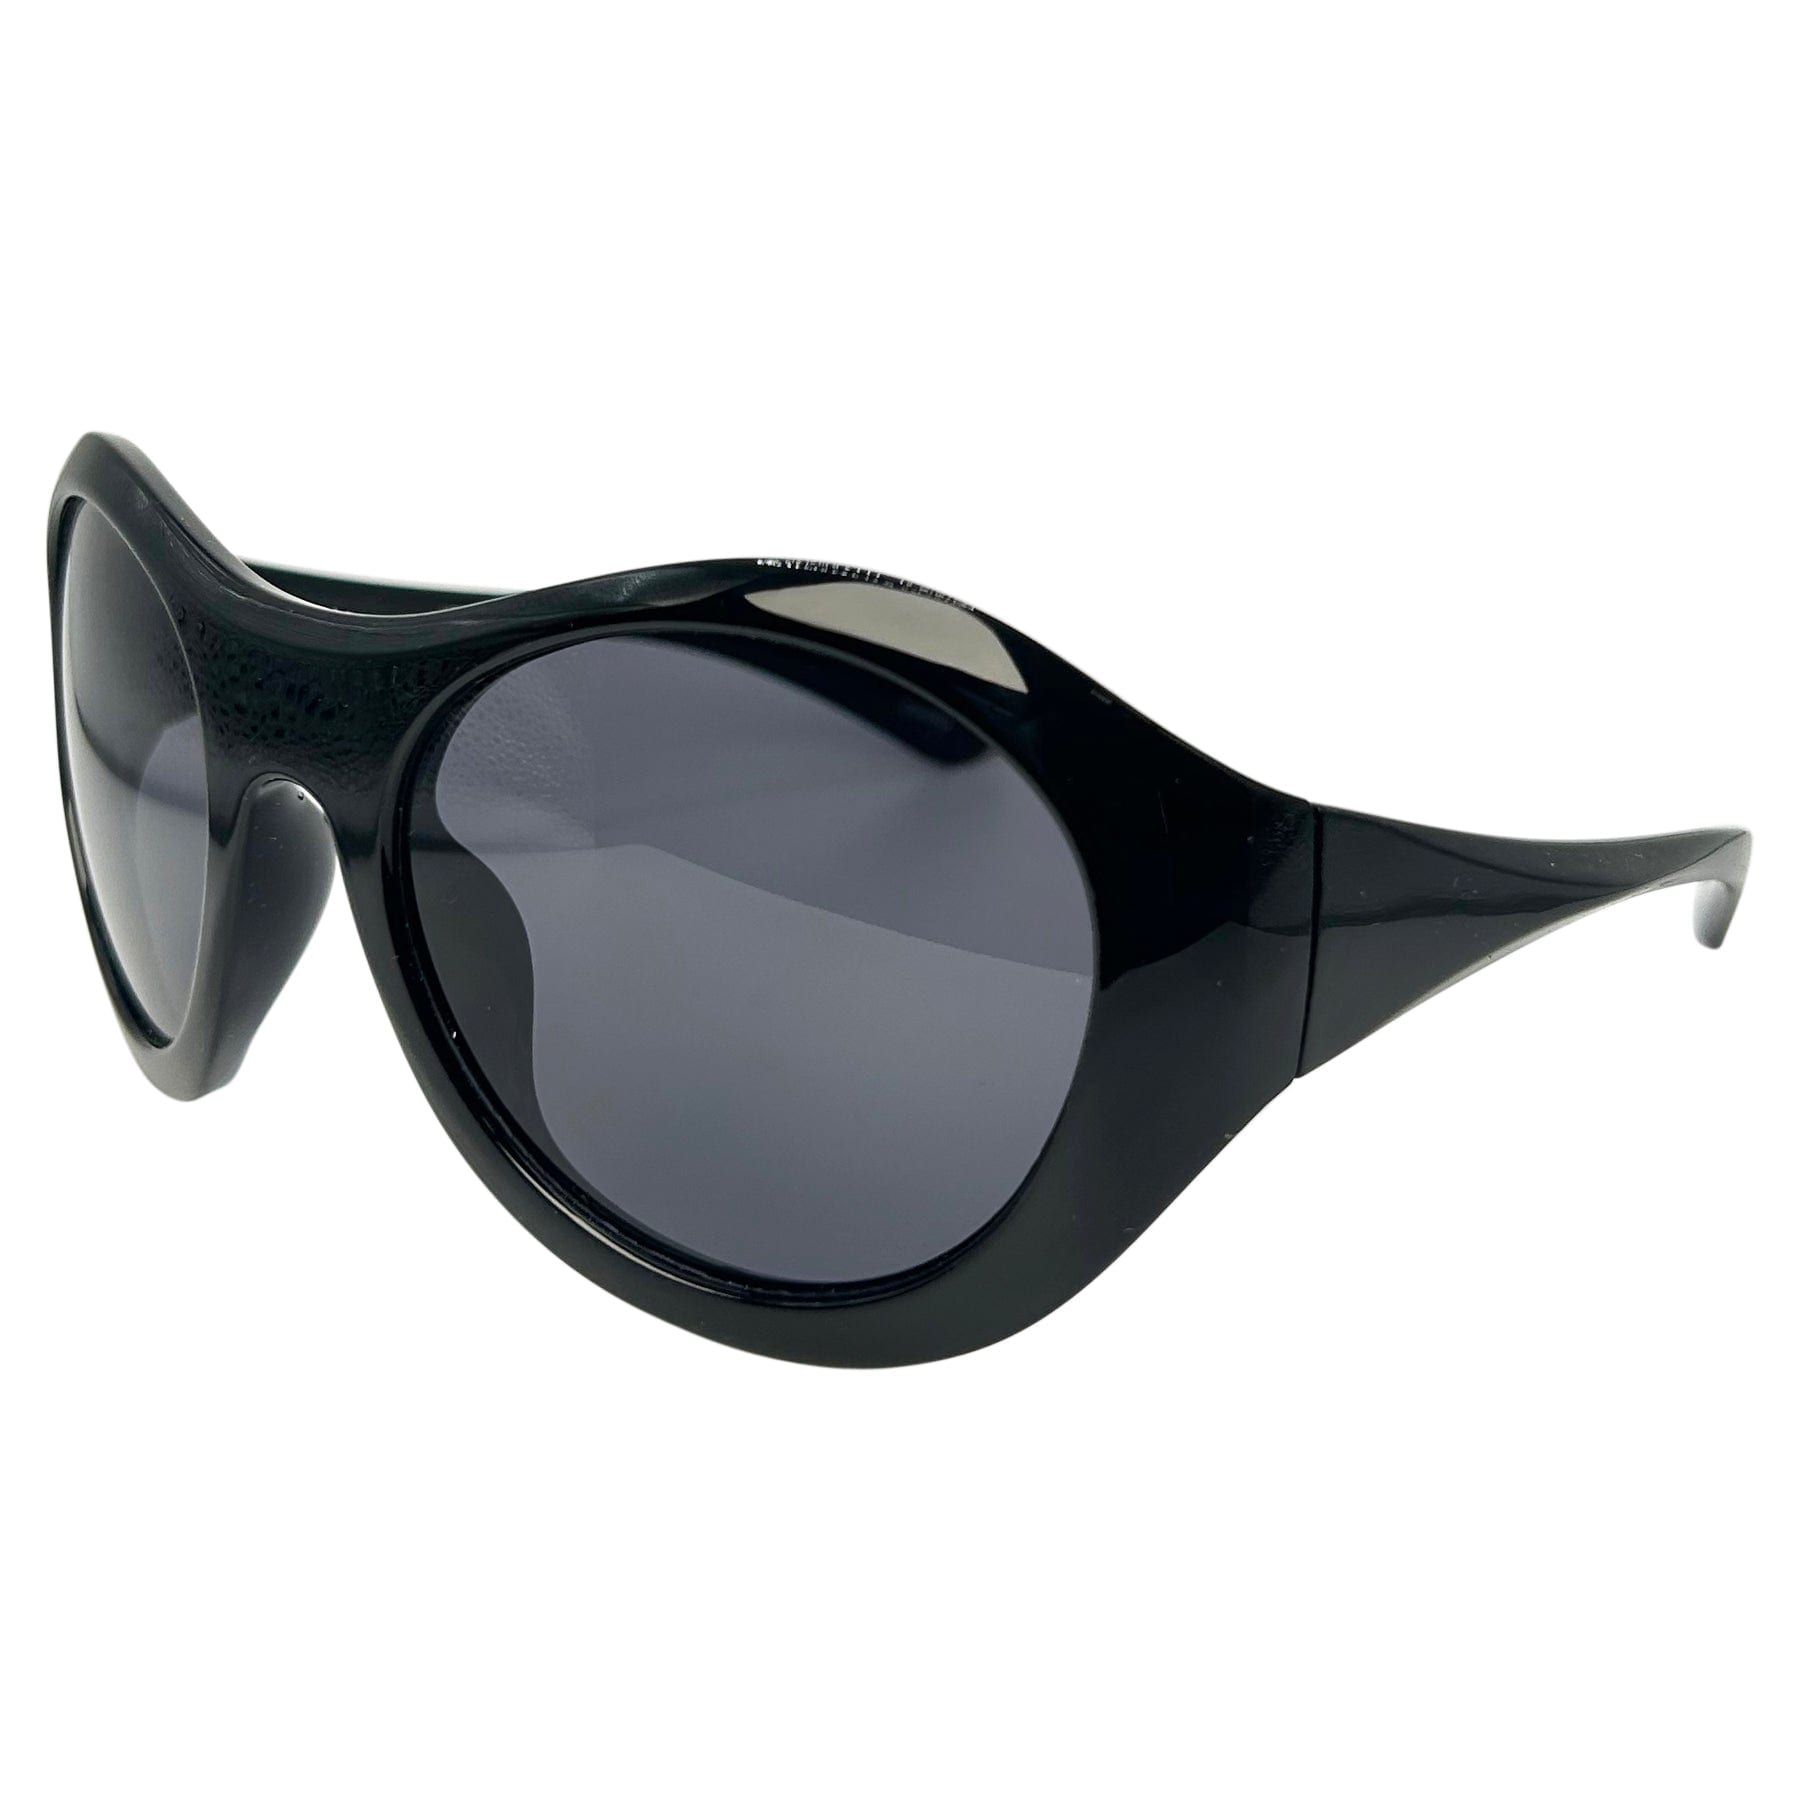 y2k big sunglasses with a wraparound frame